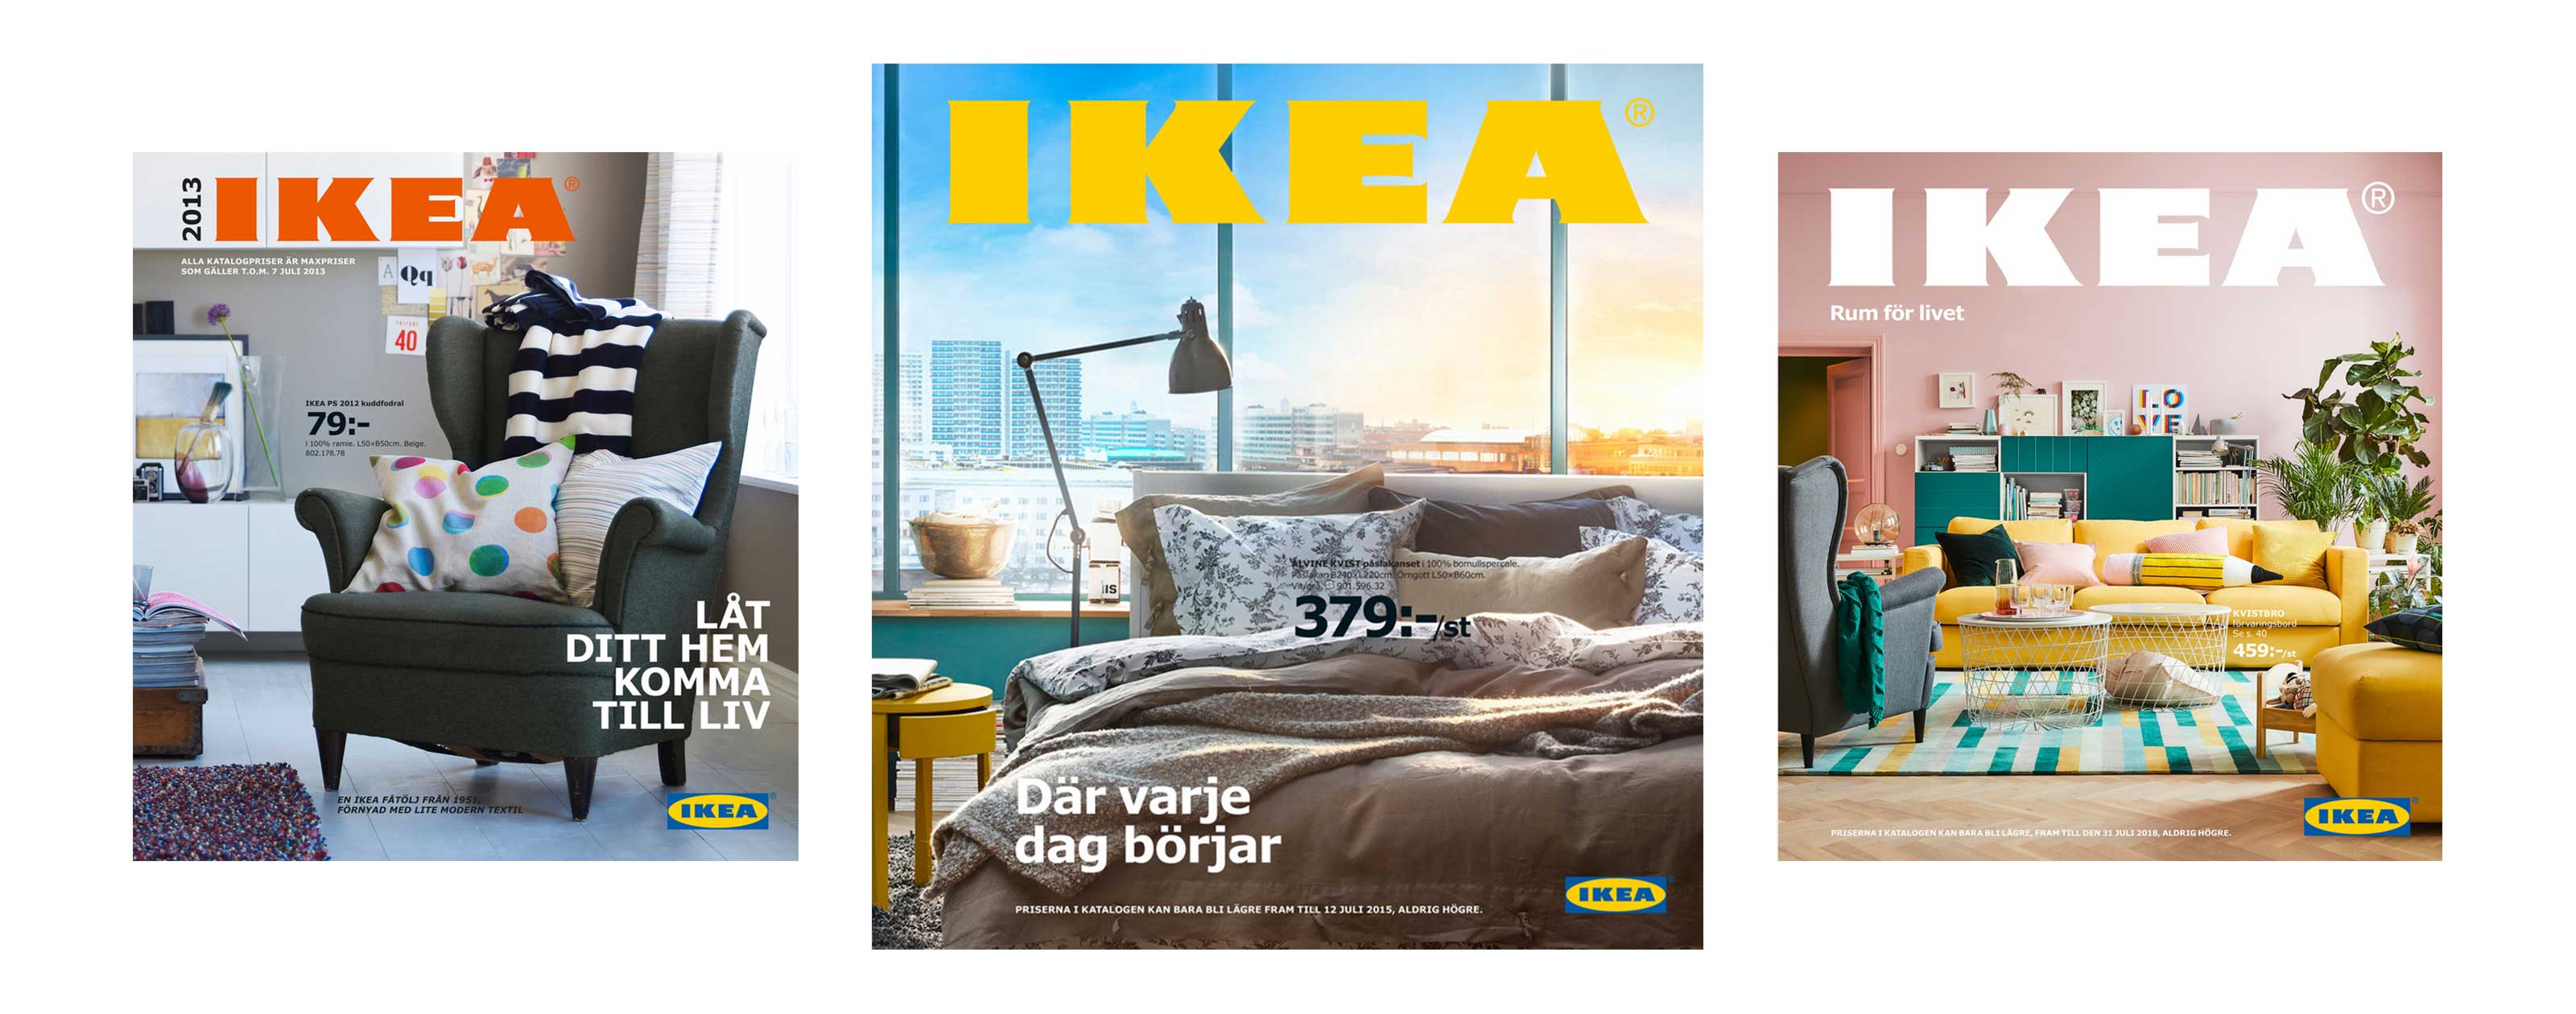 IKEA-slide 7